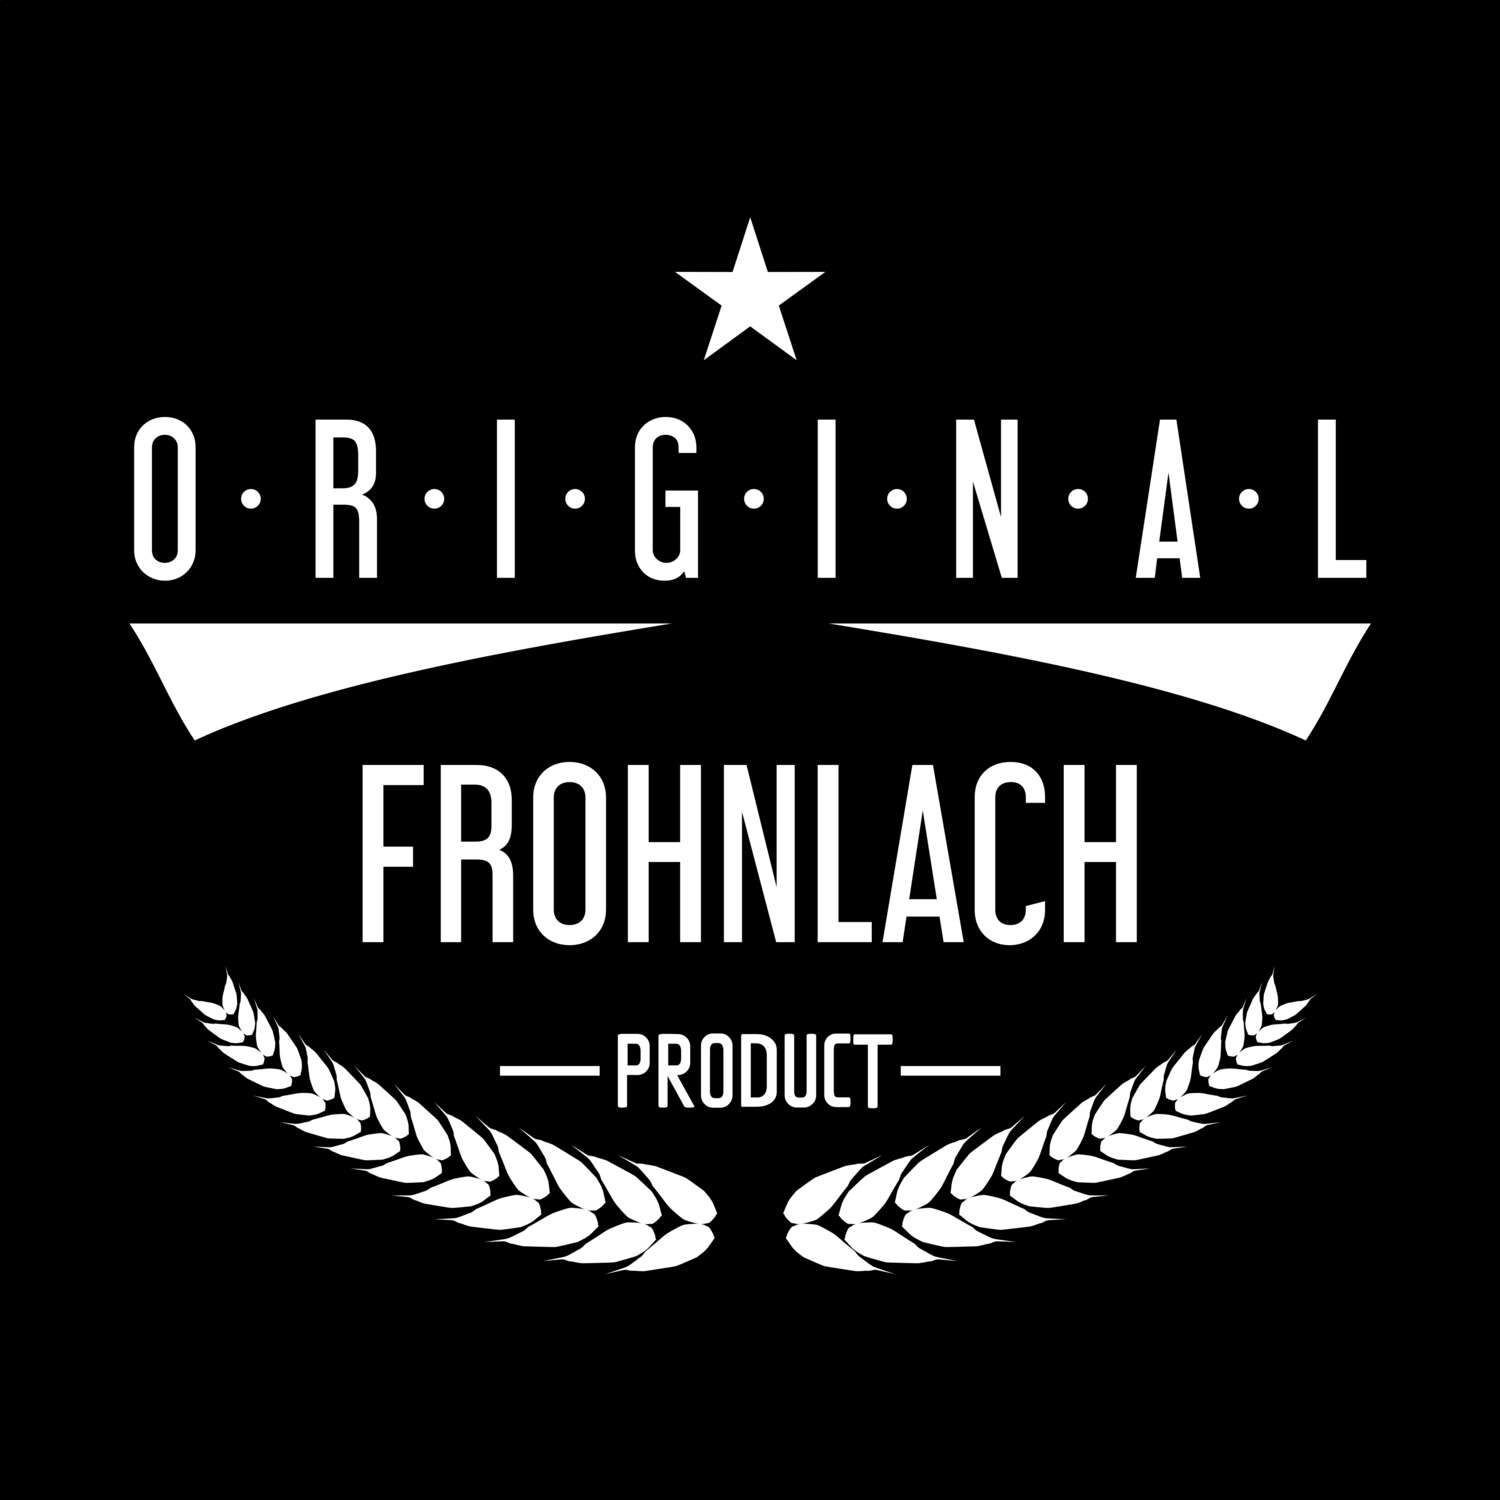 Frohnlach T-Shirt »Original Product«